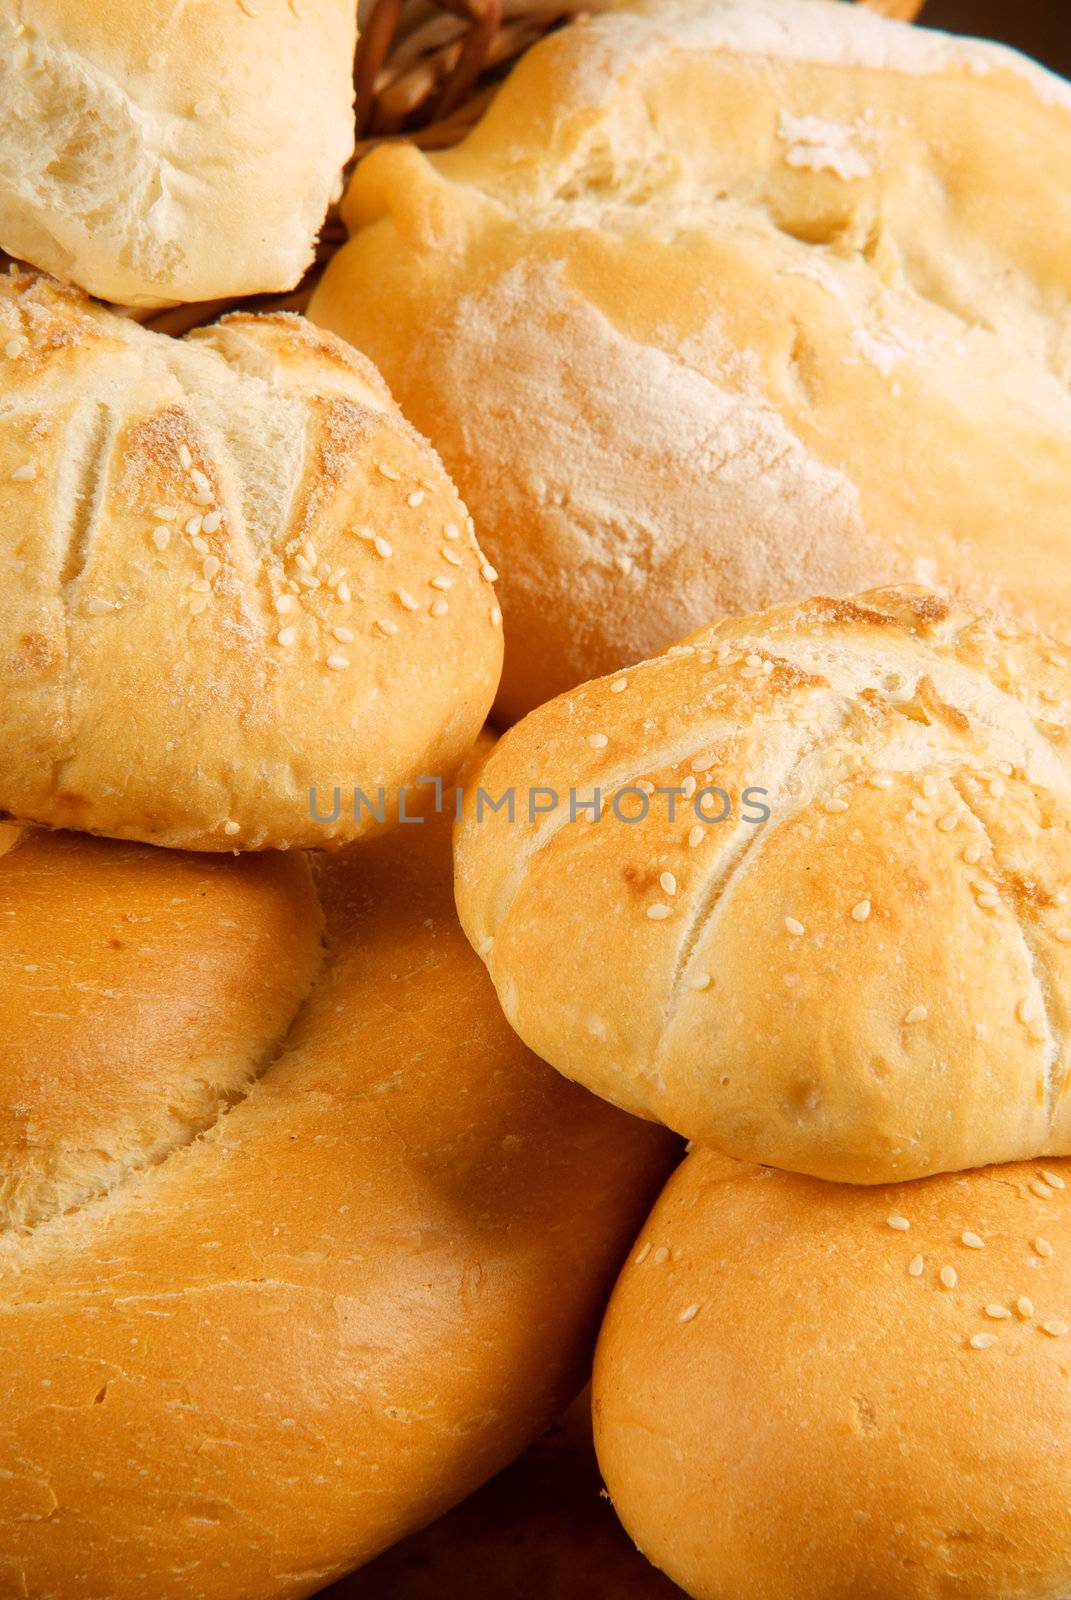 Fresh baked bread rolls